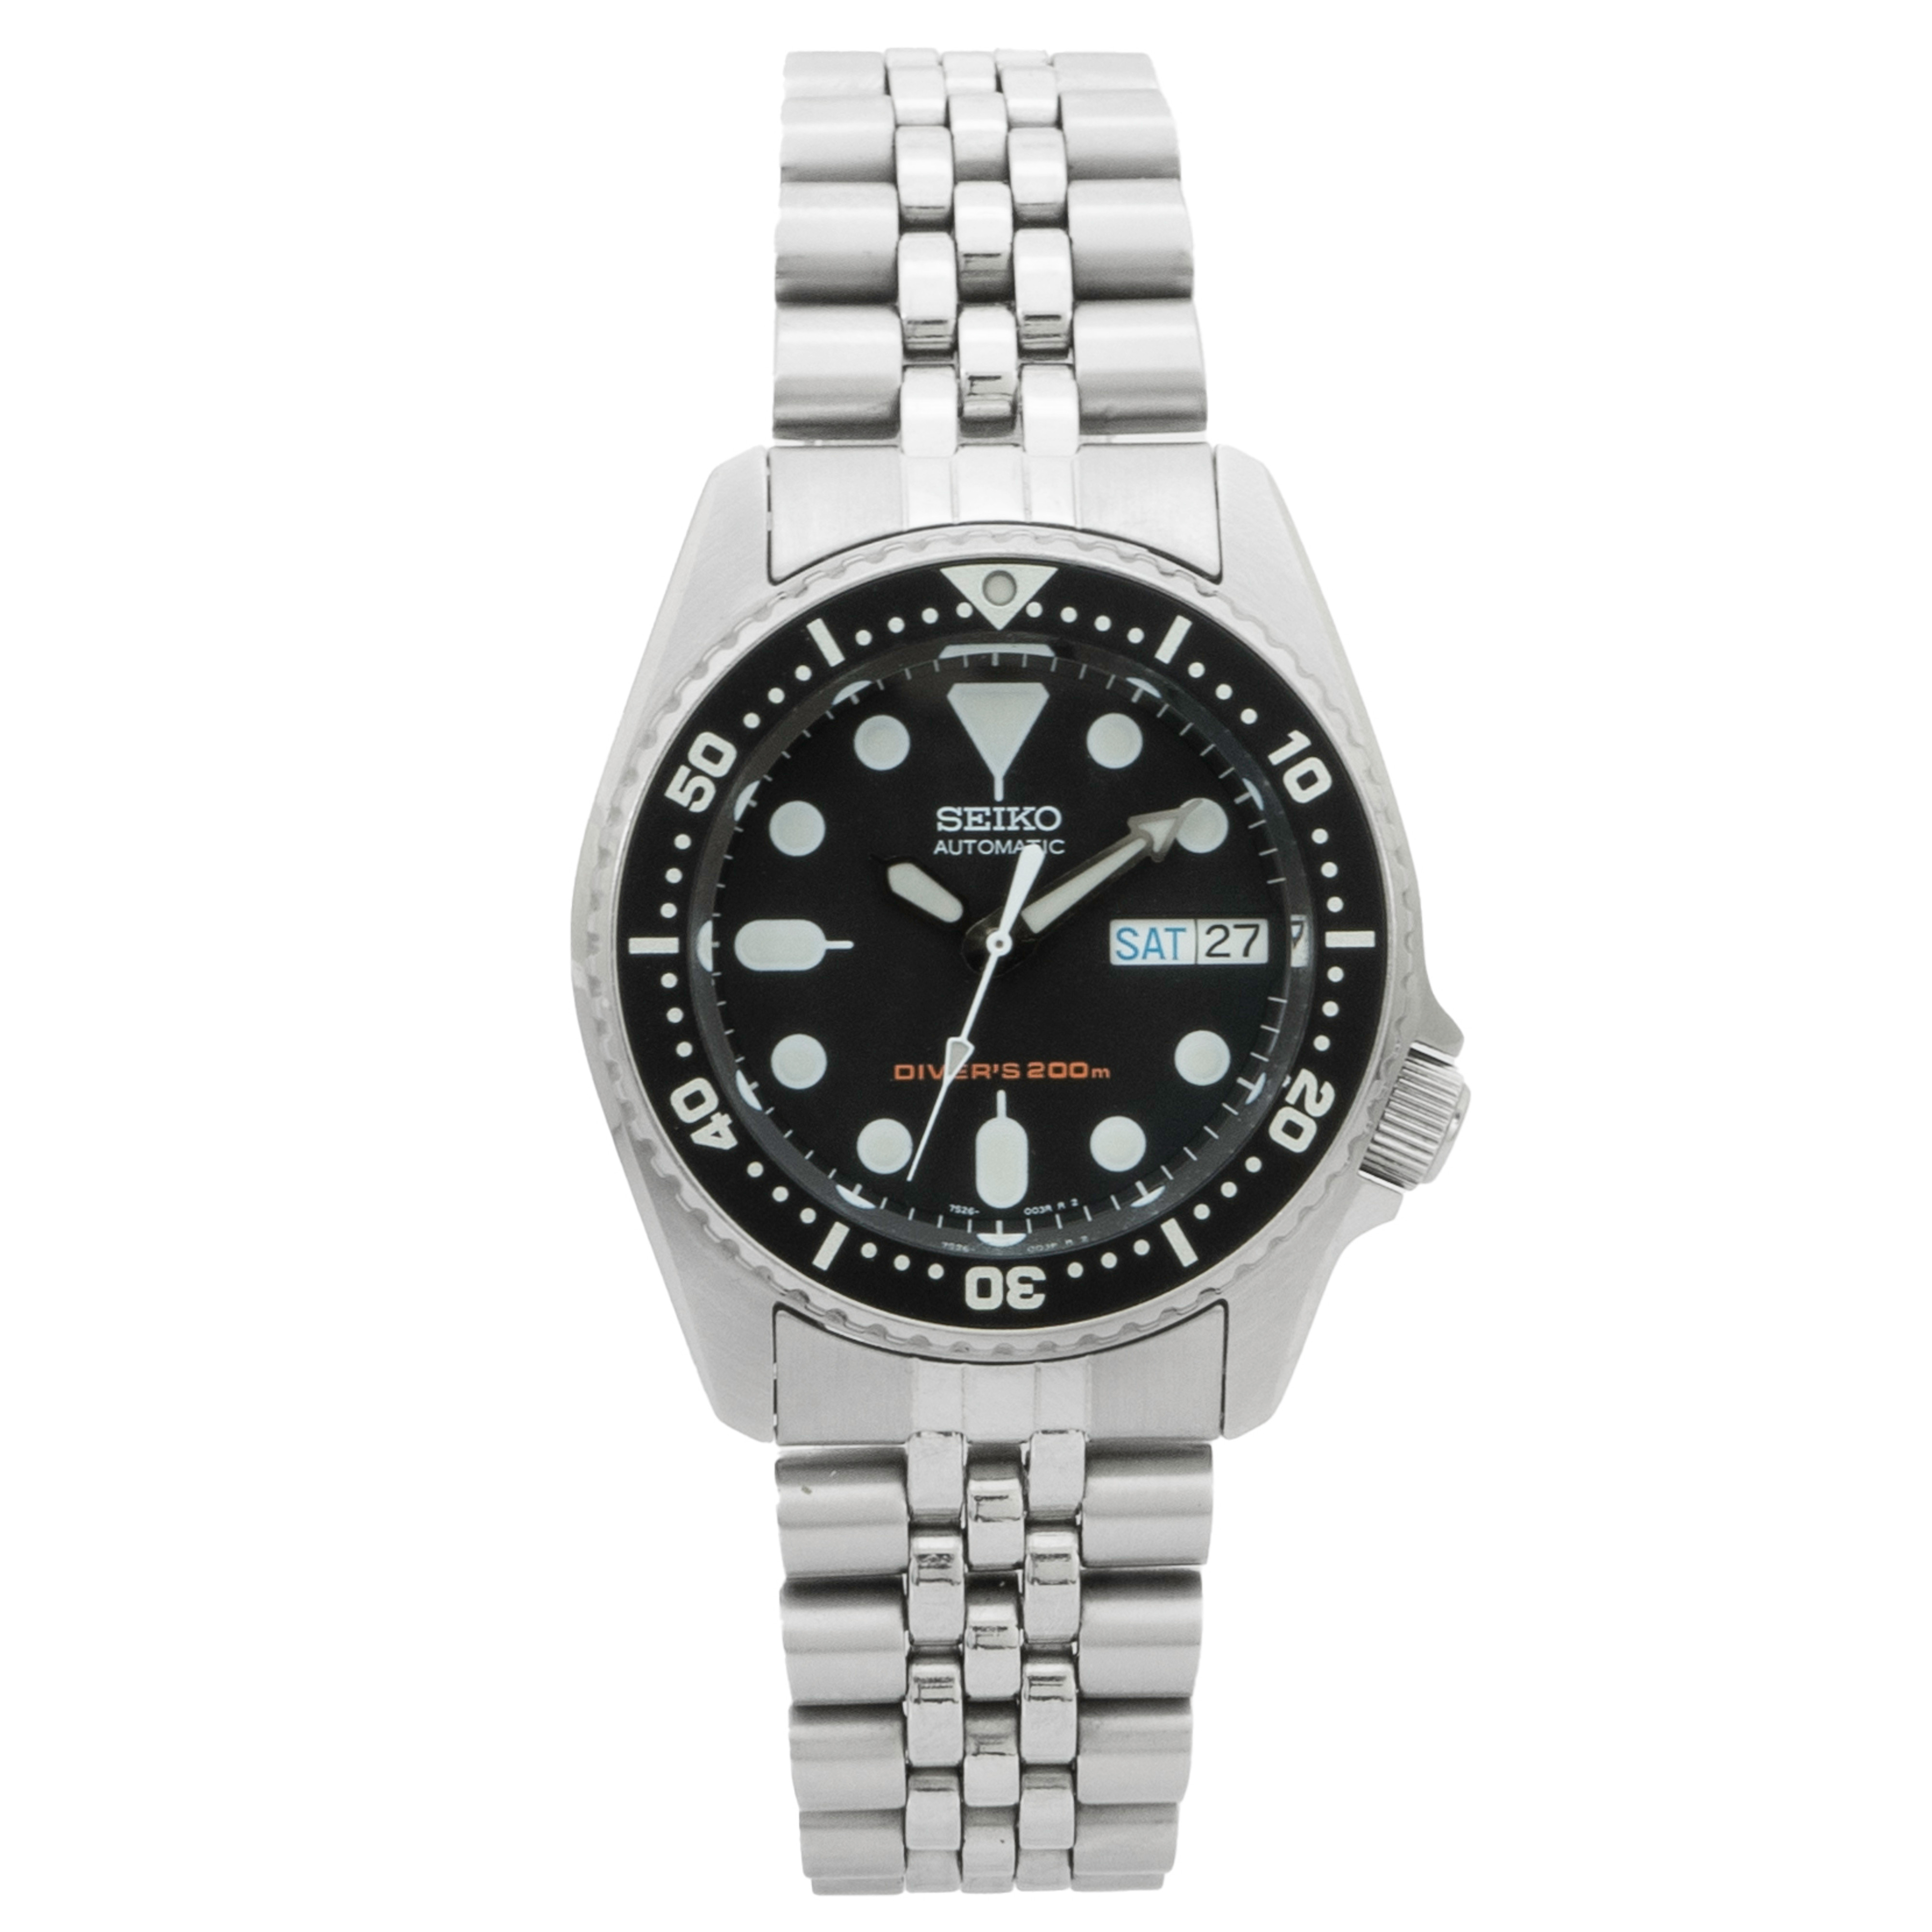 Seiko Automatic Watch SKX013K2 - Inventory 4316 - DelrayWatch.com